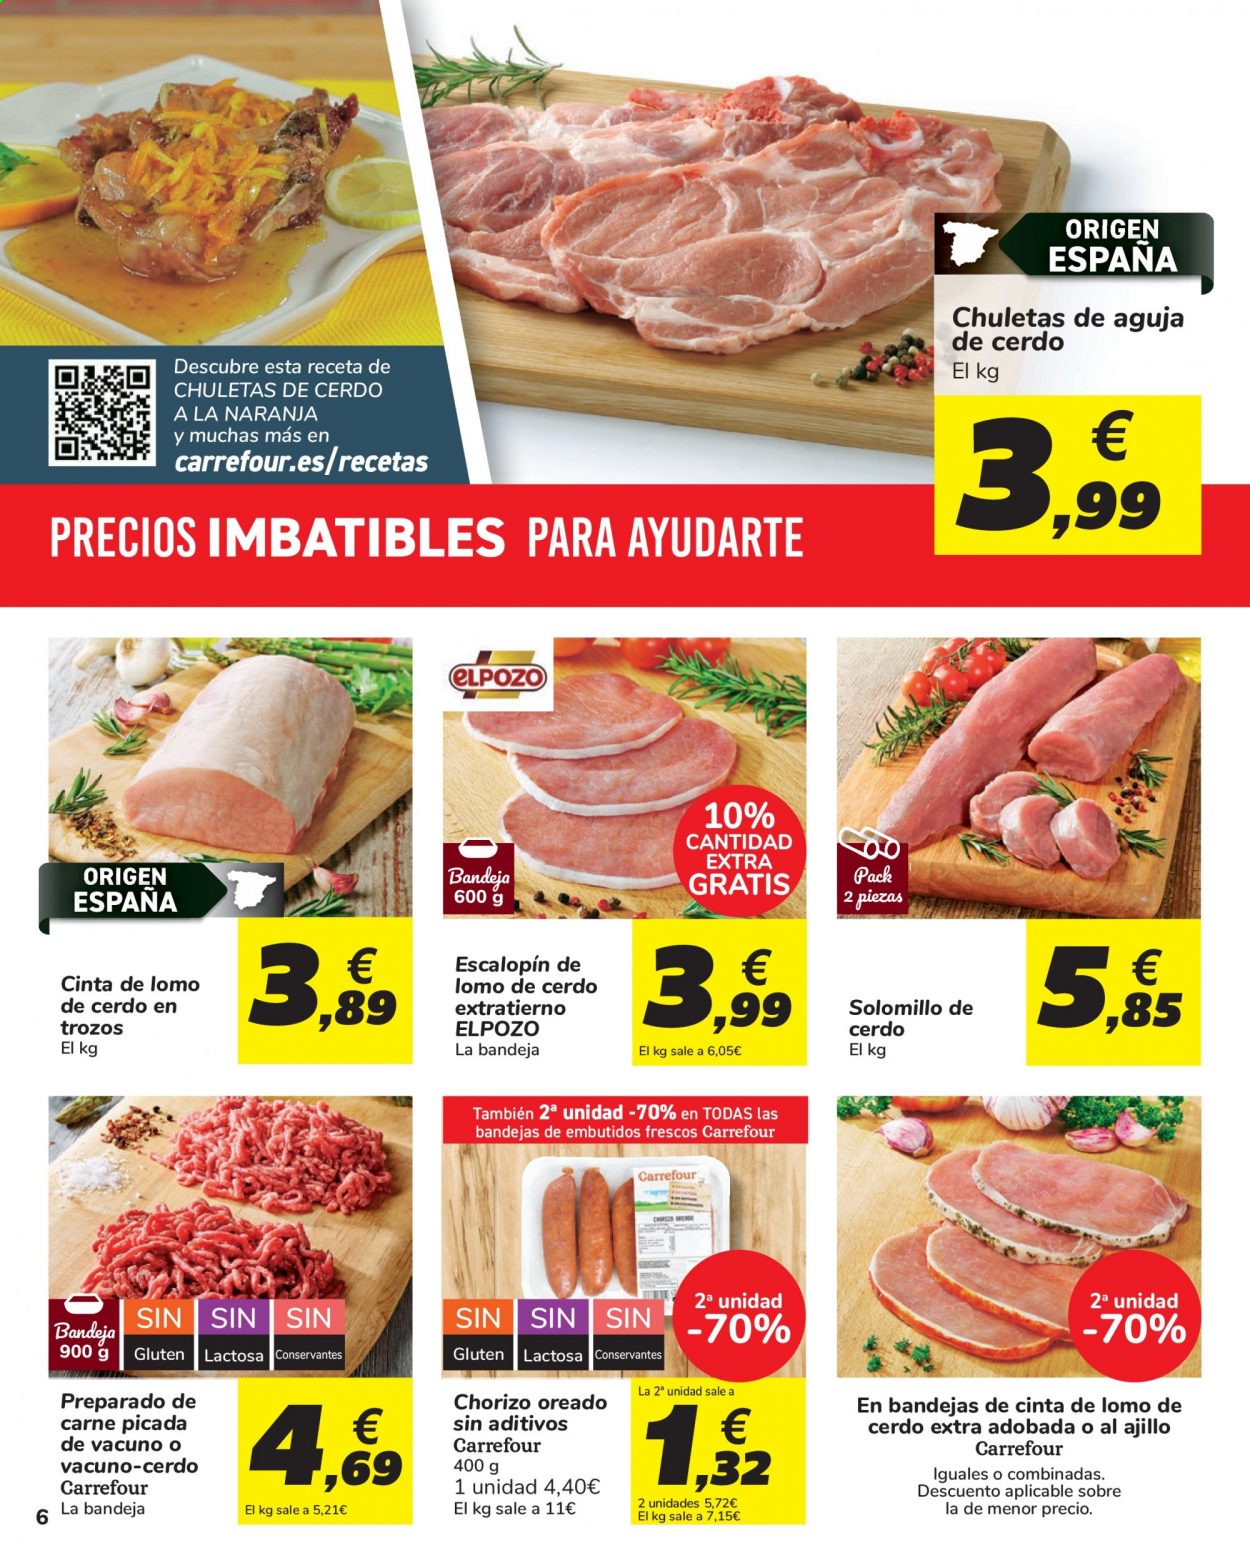 thumbnail - Folleto actual Carrefour - 16/07/21 - 28/07/21 - Ventas - solomillo, lomo de cerdo, solomillo de cerdo, cinta de lomo, carne picada, chorizo. Página 6.